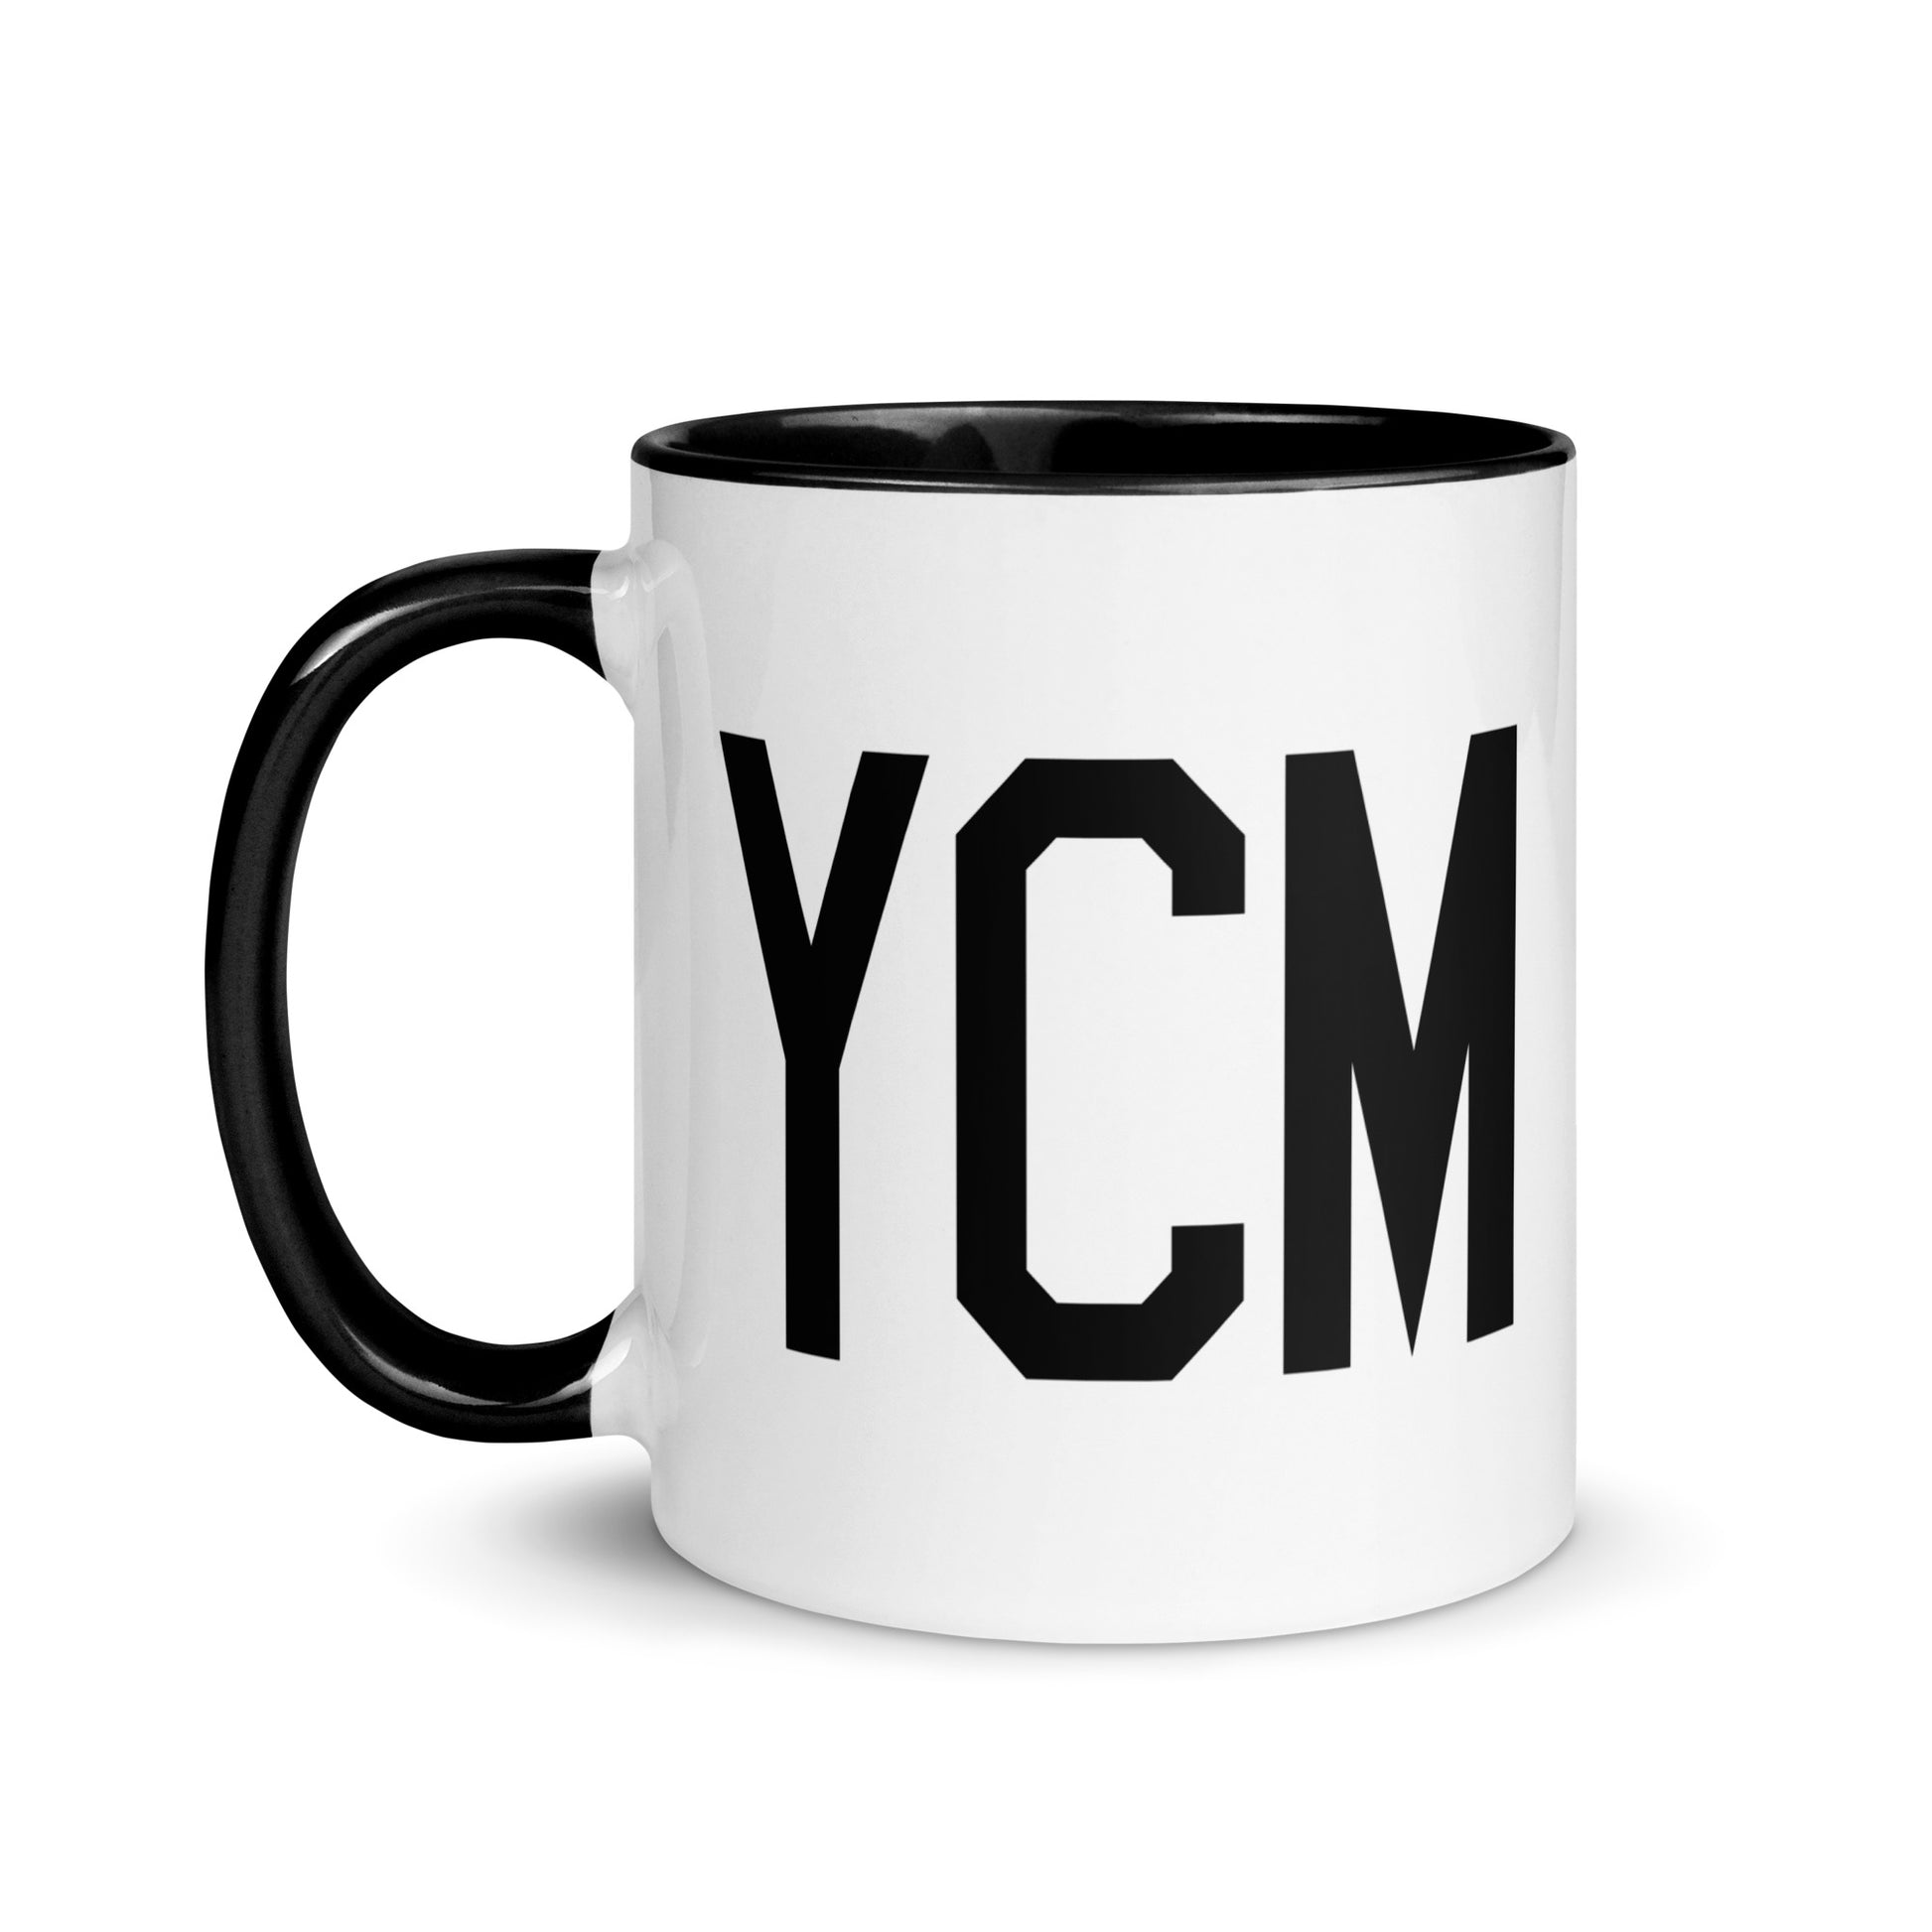 Aviation-Theme Coffee Mug - Black • YCM St. Catharines • YHM Designs - Image 03